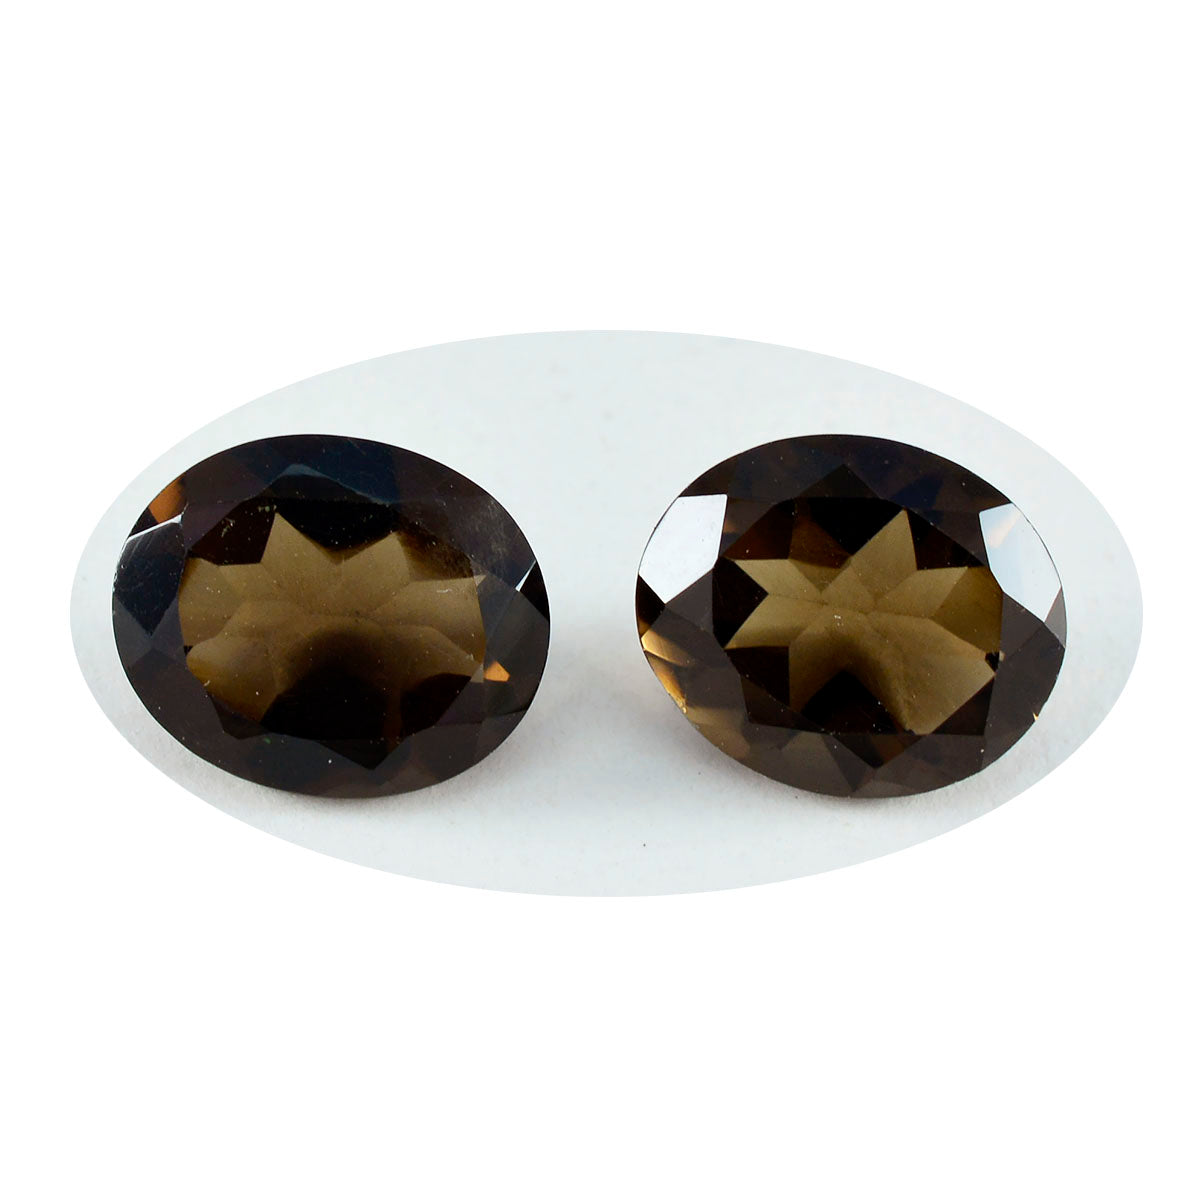 Riyogems 1PC Real Brown Smoky Quartz Faceted 8x10 mm Oval Shape handsome Quality Loose Gems